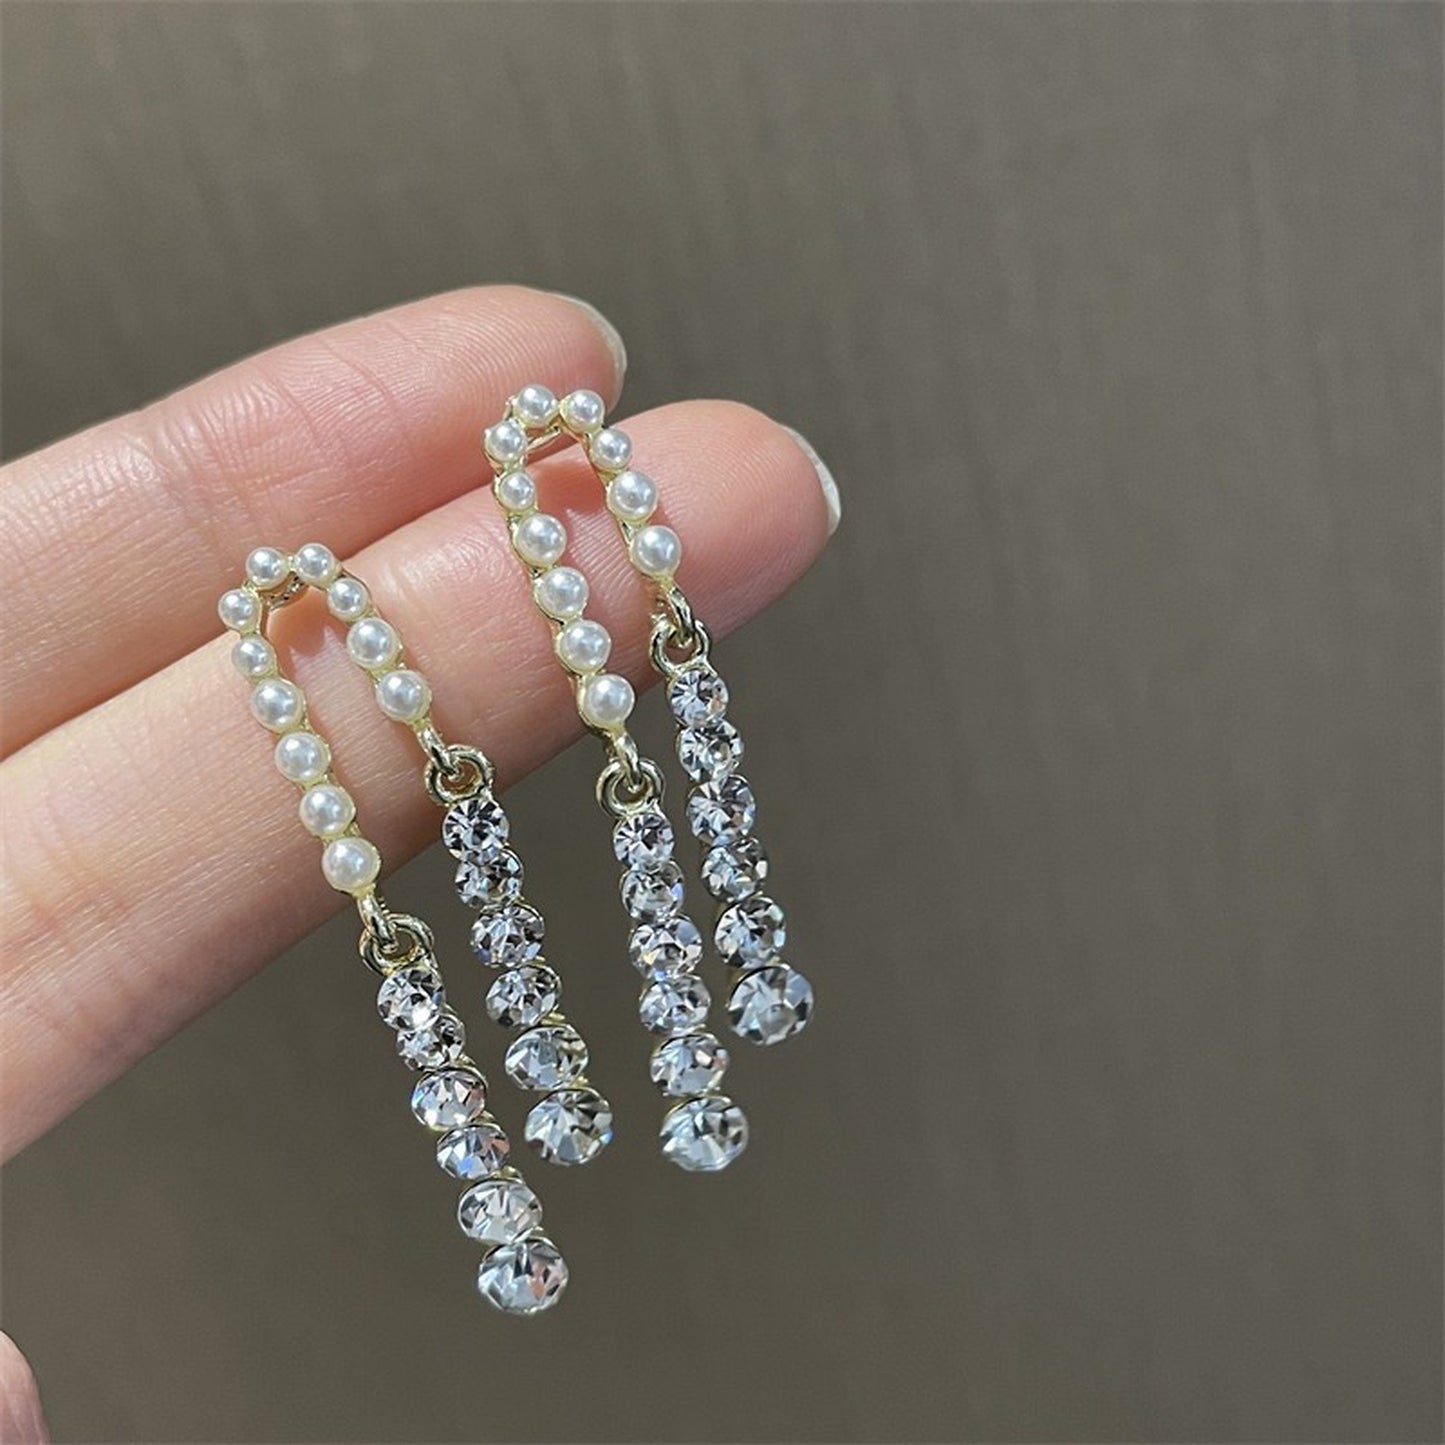 Double layer tassel earrings, Pearl crystal cz dangle earrings, Gatsby 90s party earrings, Bridesmaid bridal wedding earrings, Delicate gift